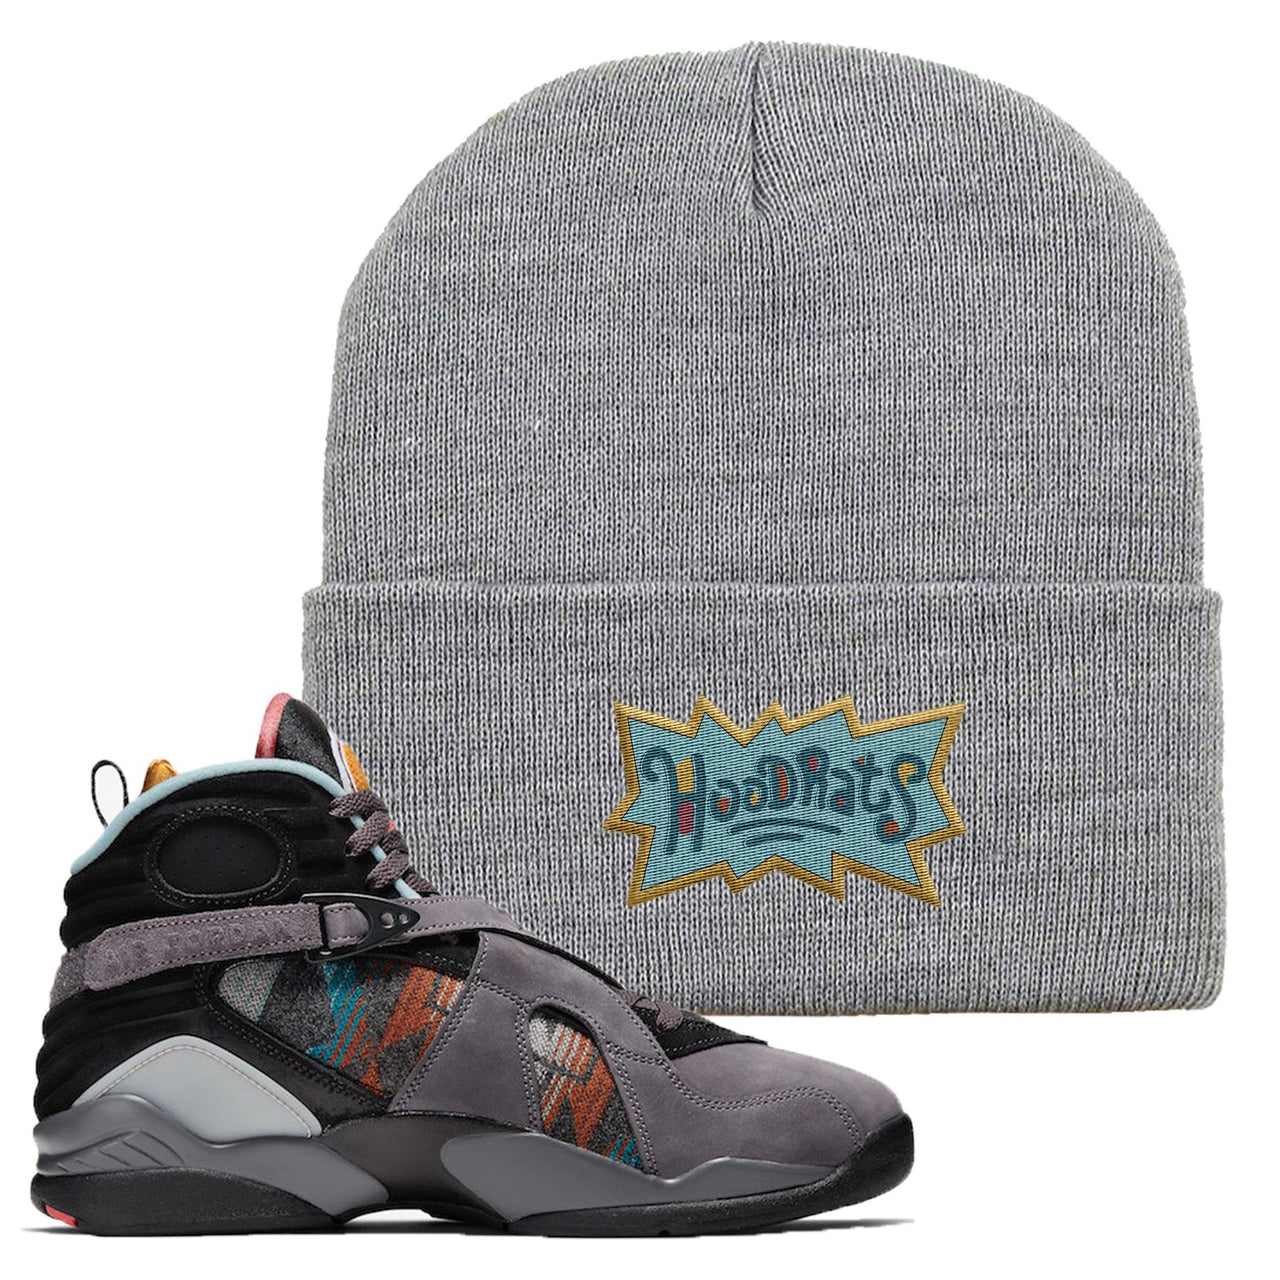 Jordan 8 N7 Pendleton Hood Rats Light Gray Sneaker Hook Up Beanie